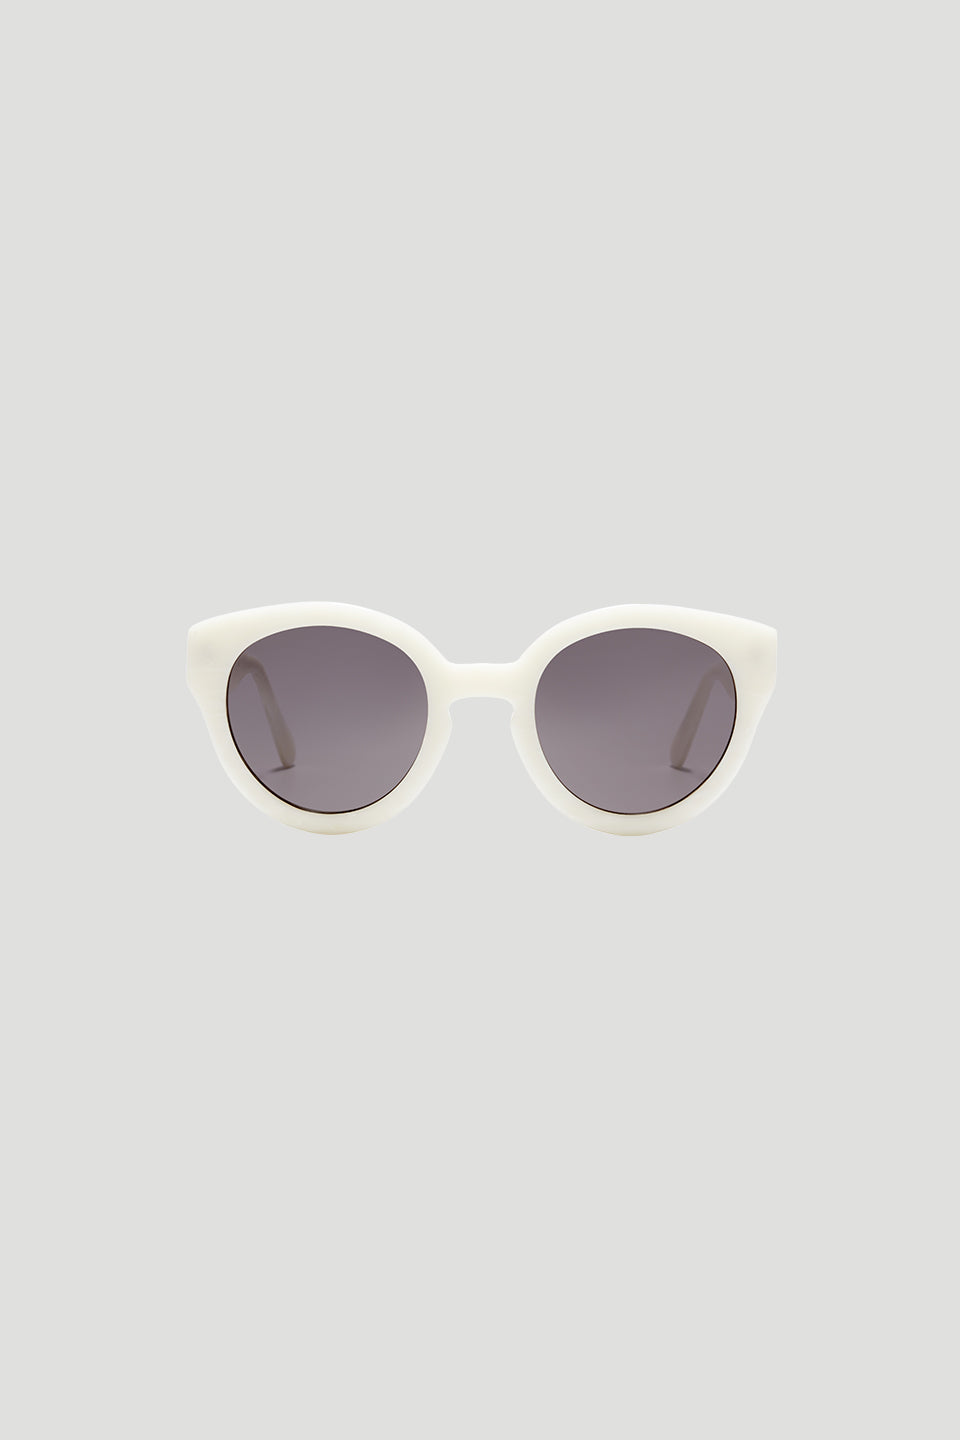 Sunglasses The Mindful Pearl Stone